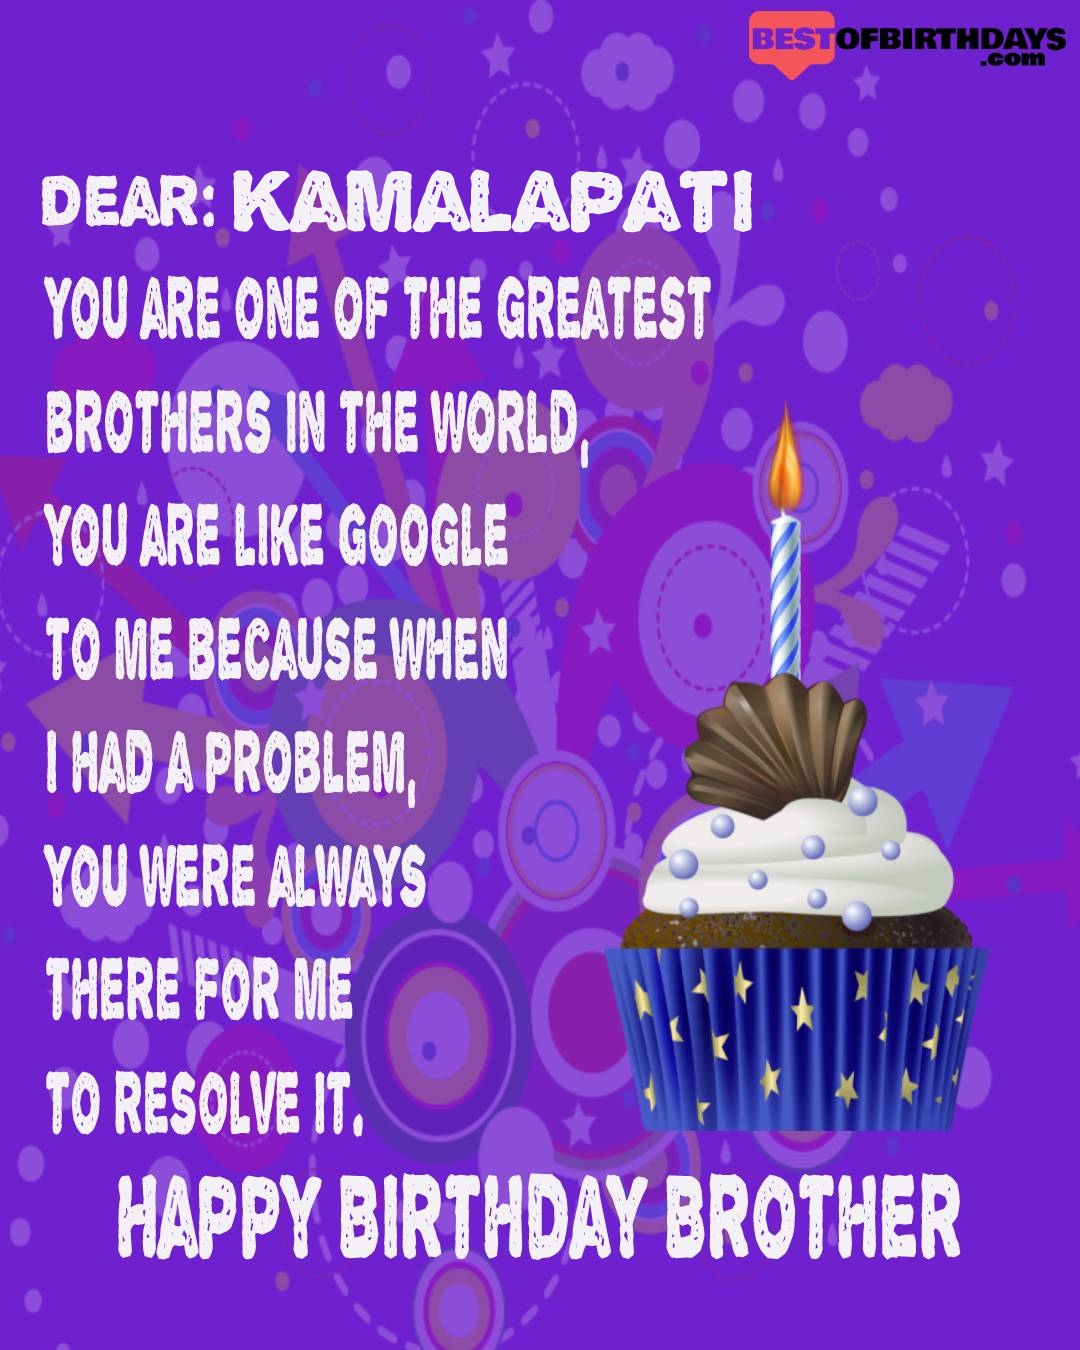 Happy birthday kamalapati bhai brother bro